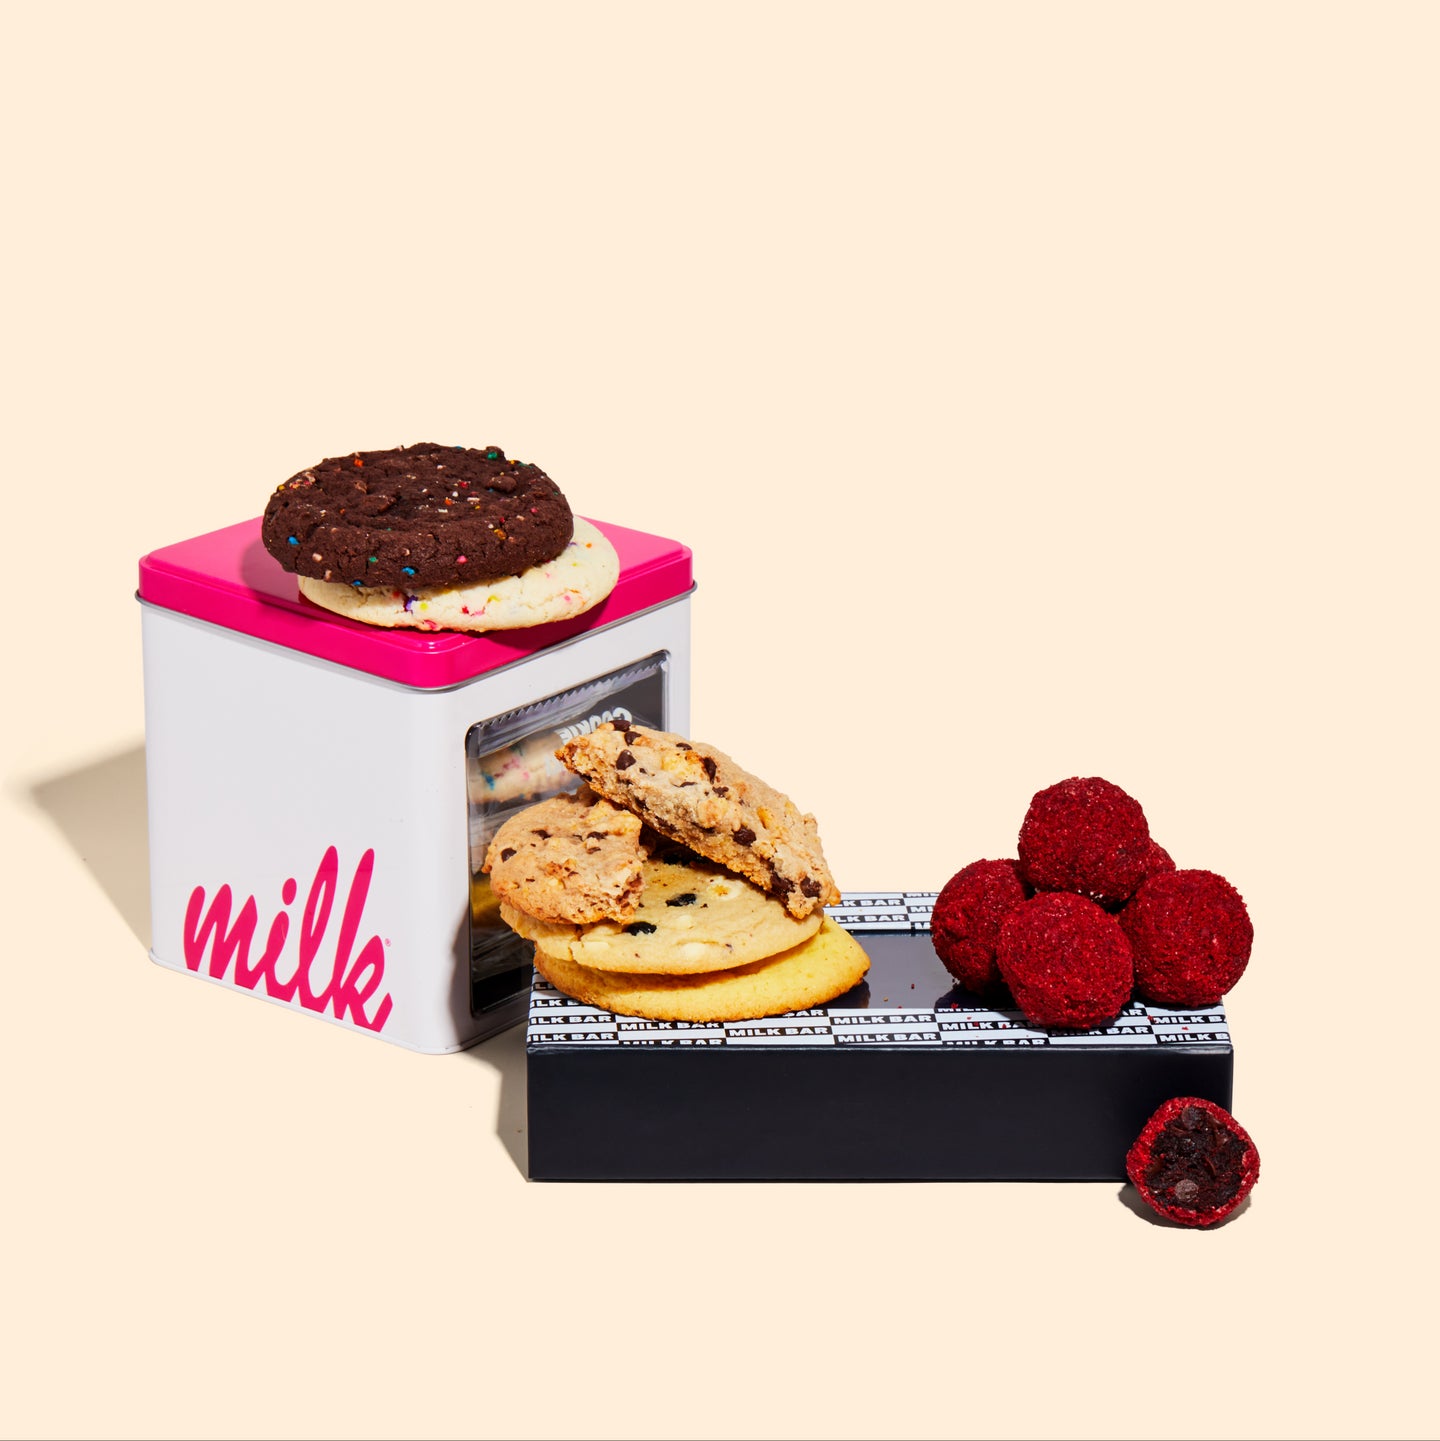 Red Velvet Cheesecake Truffle Dozen Box next to an open Assorted Cookie Tin.